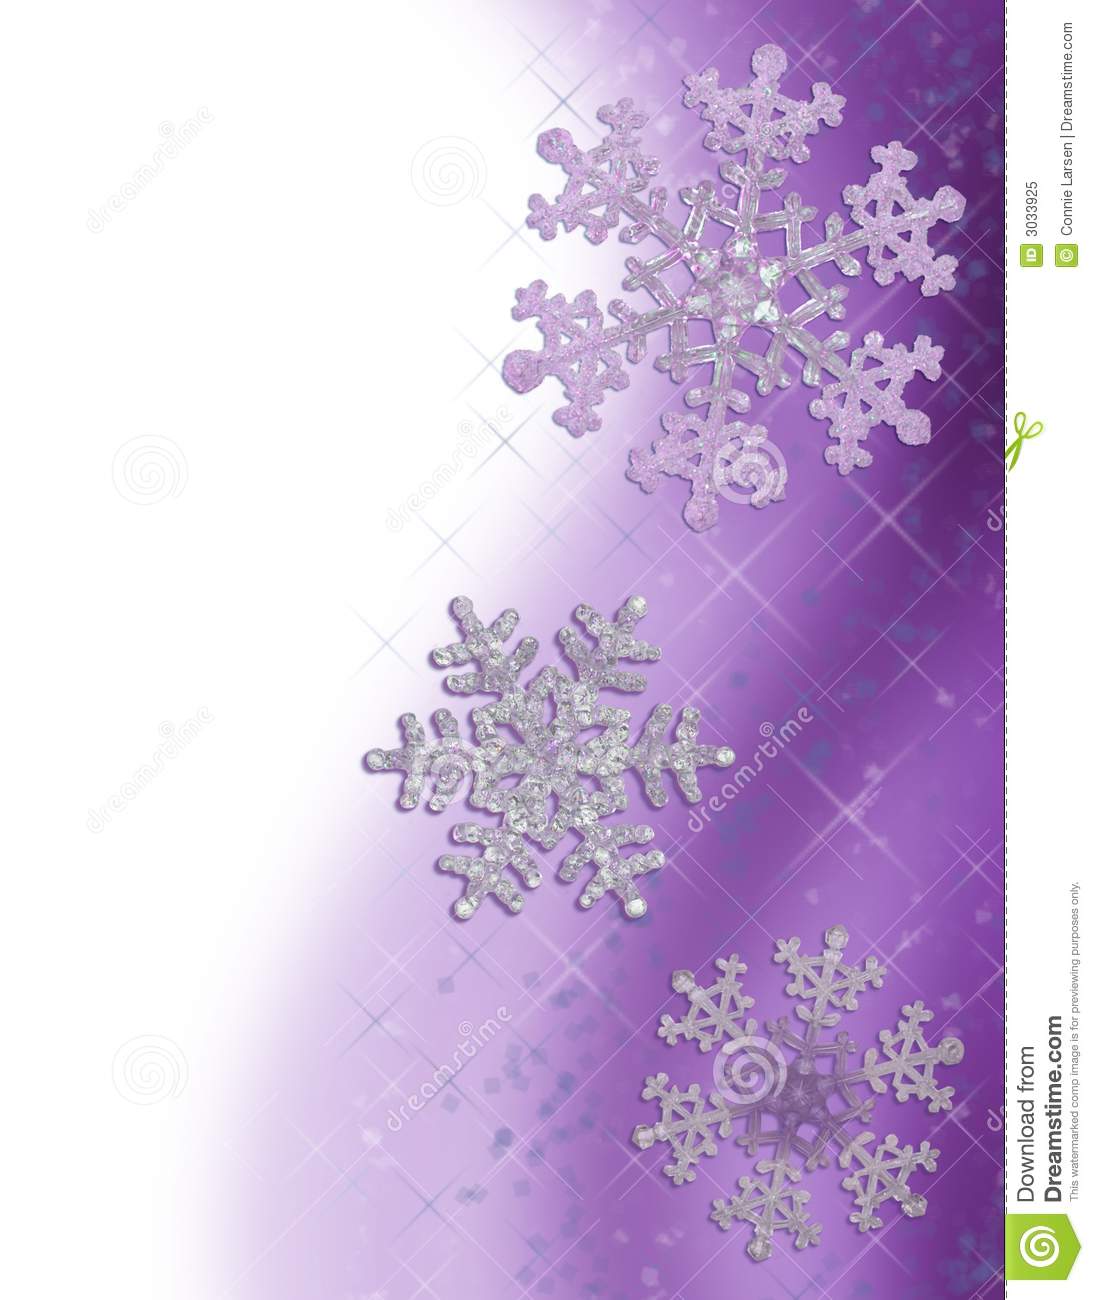 Purple Snowflake Border Royalty Free Stock Photo   Image  3033925